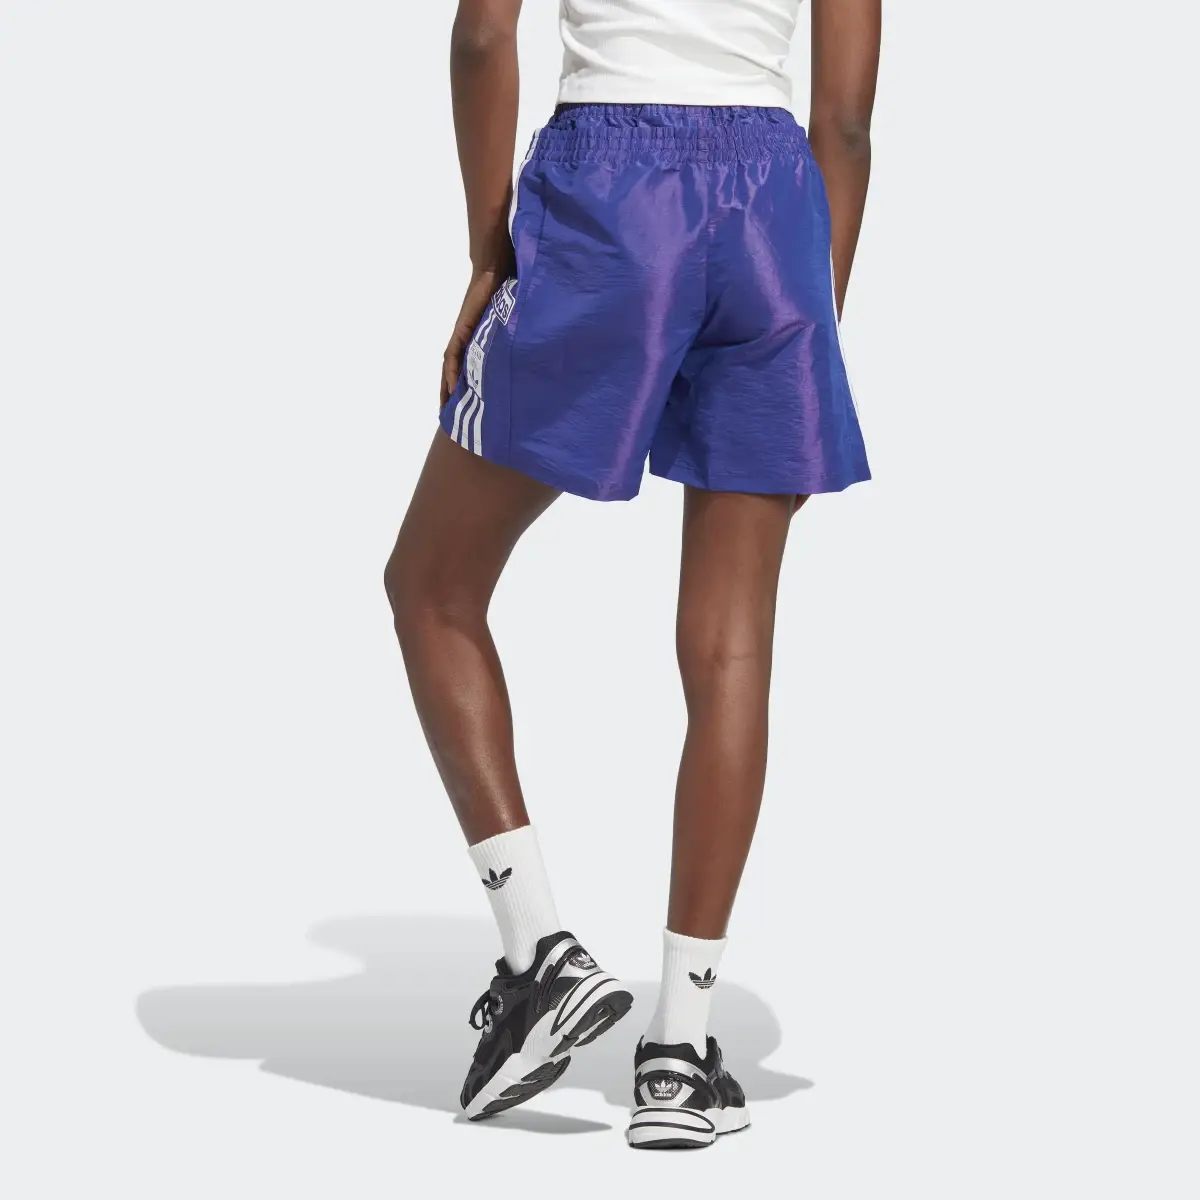 Adidas Always Original Shorts. 2